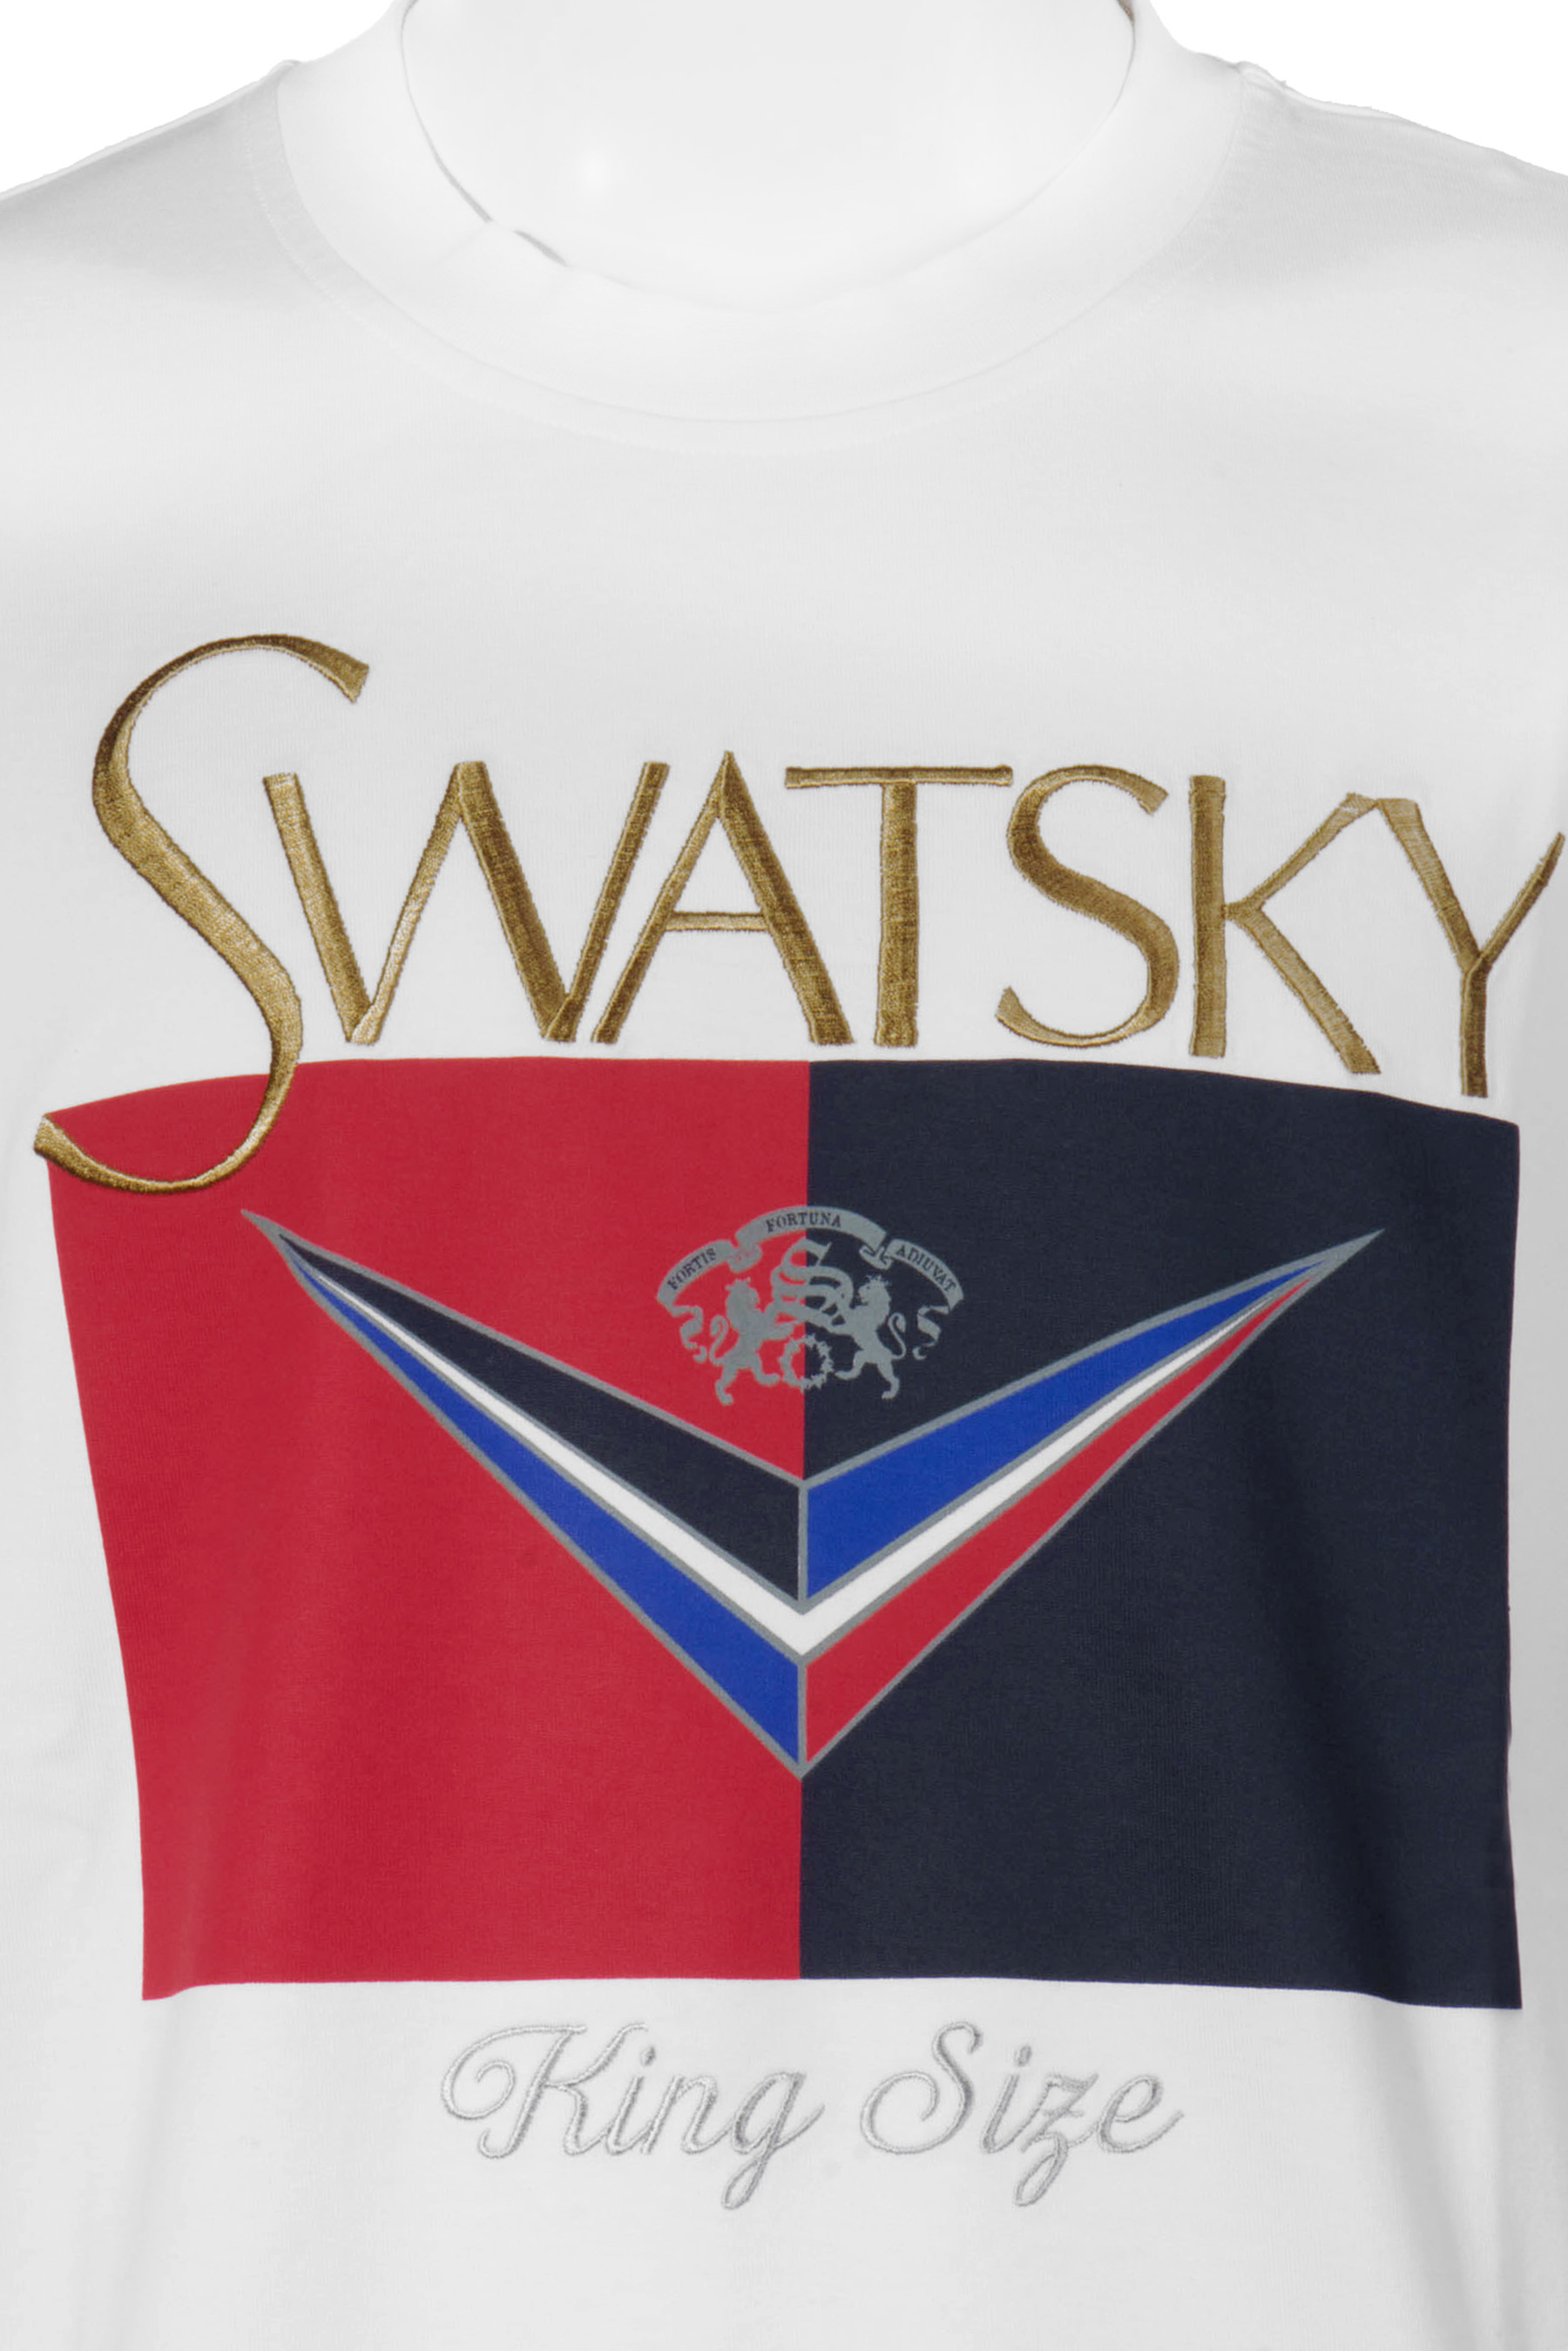 Swatsky Tシャツ | ethicsinsports.ch